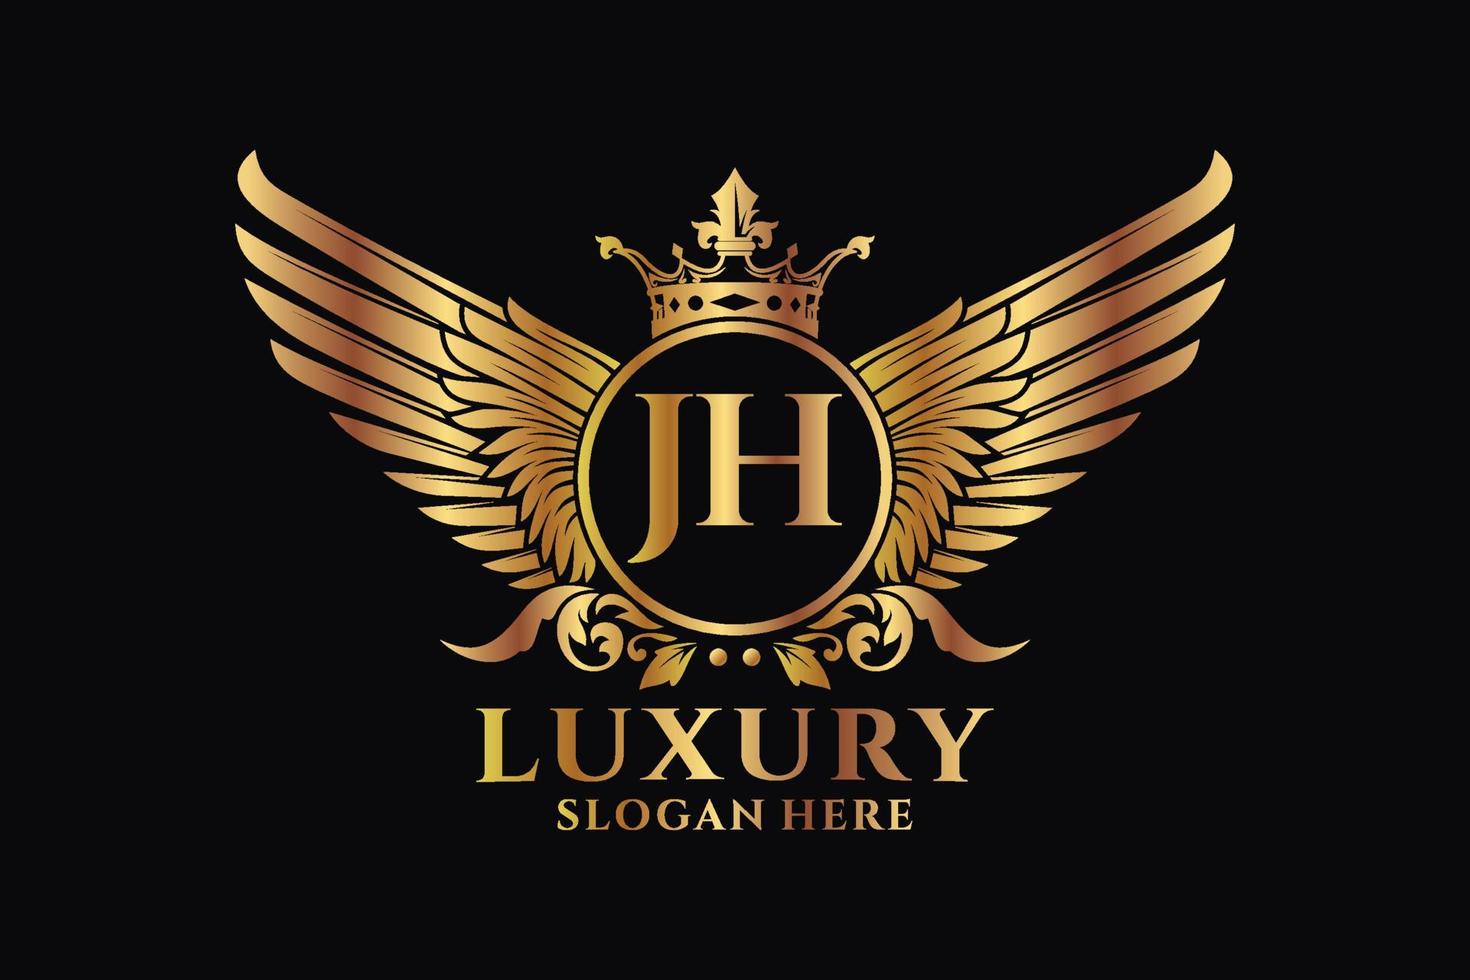 luxe Koninklijk vleugel brief jh kam goud kleur logo vector, zege logo, kam logo, vleugel logo, vector logo sjabloon.